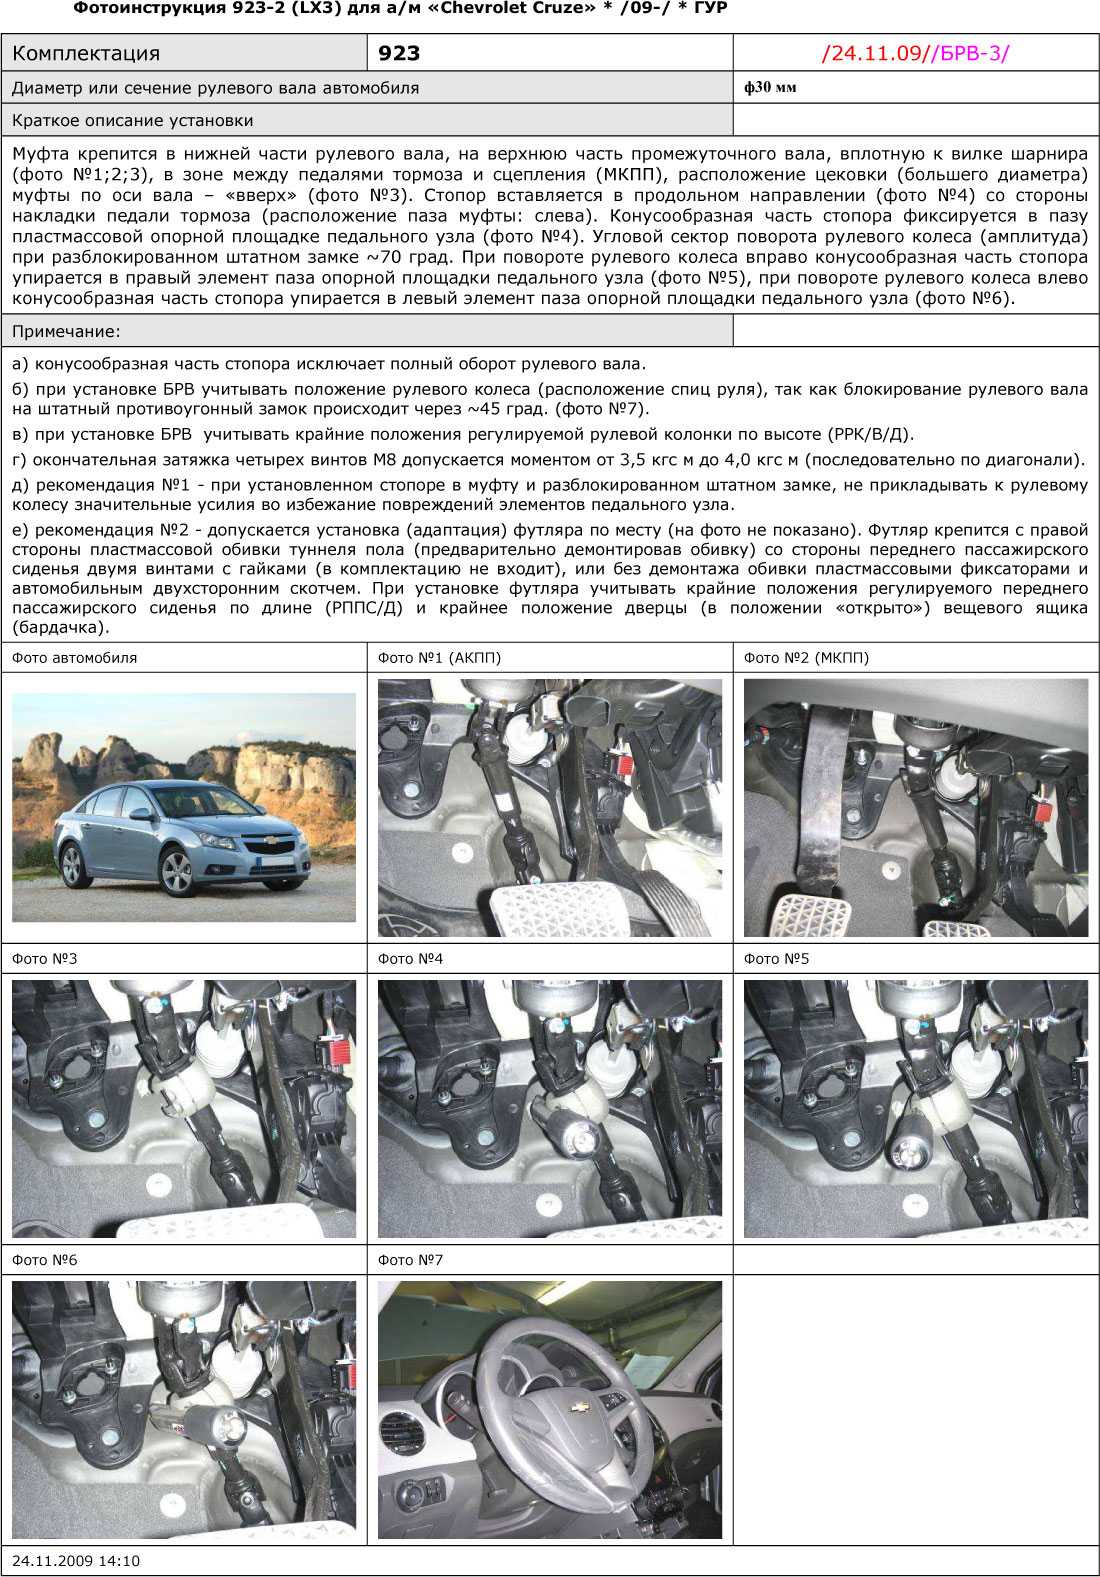 Chevrolet cruze с 2009 года, регулировка сидений инструкция онлайн